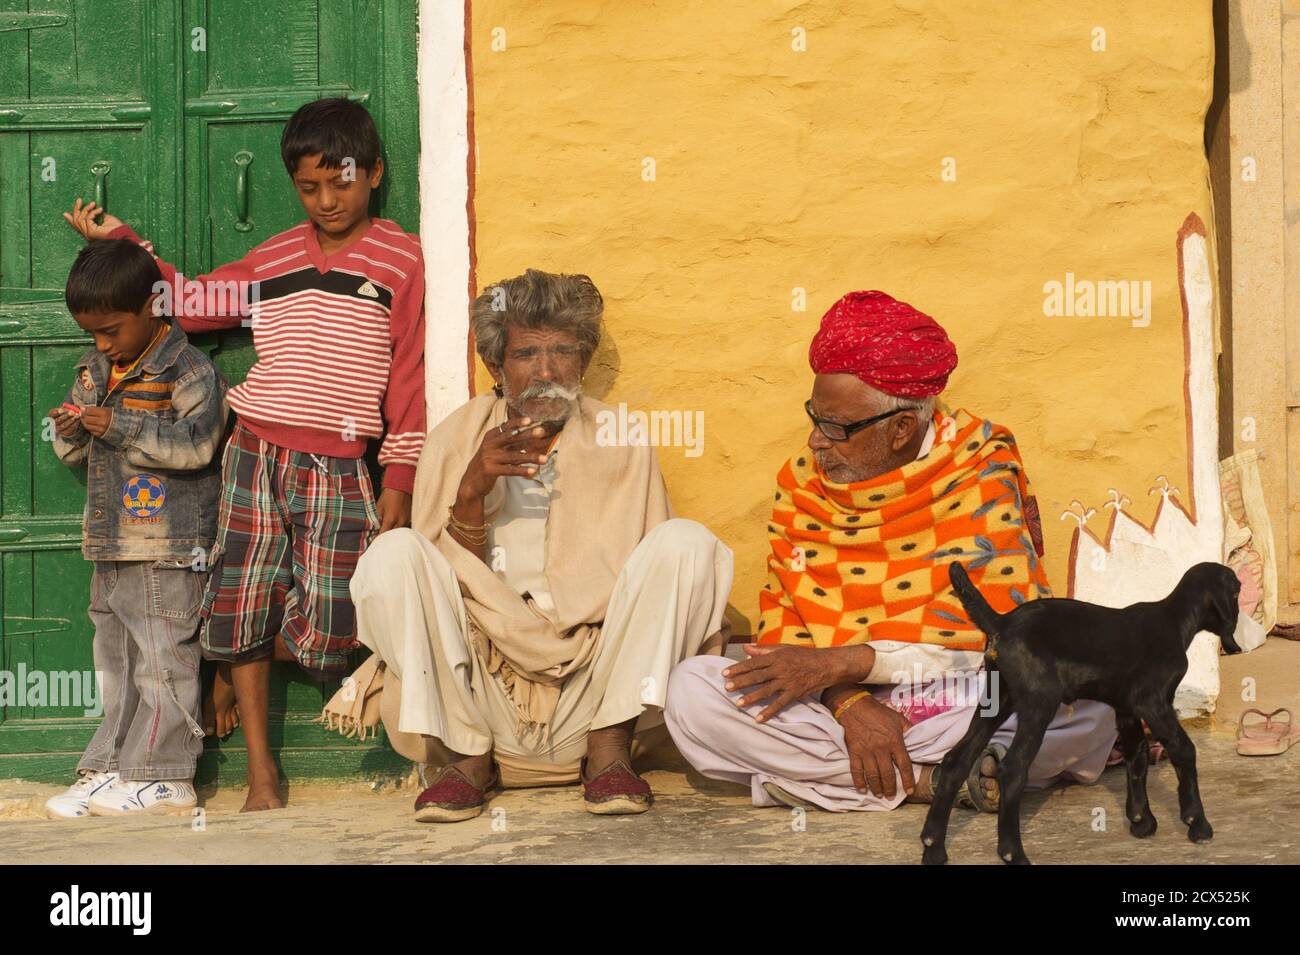 Rajasthani uomini e ragazzi, Lodurva, vicino Jaisalmer, Rajasthan, India. Foto Stock